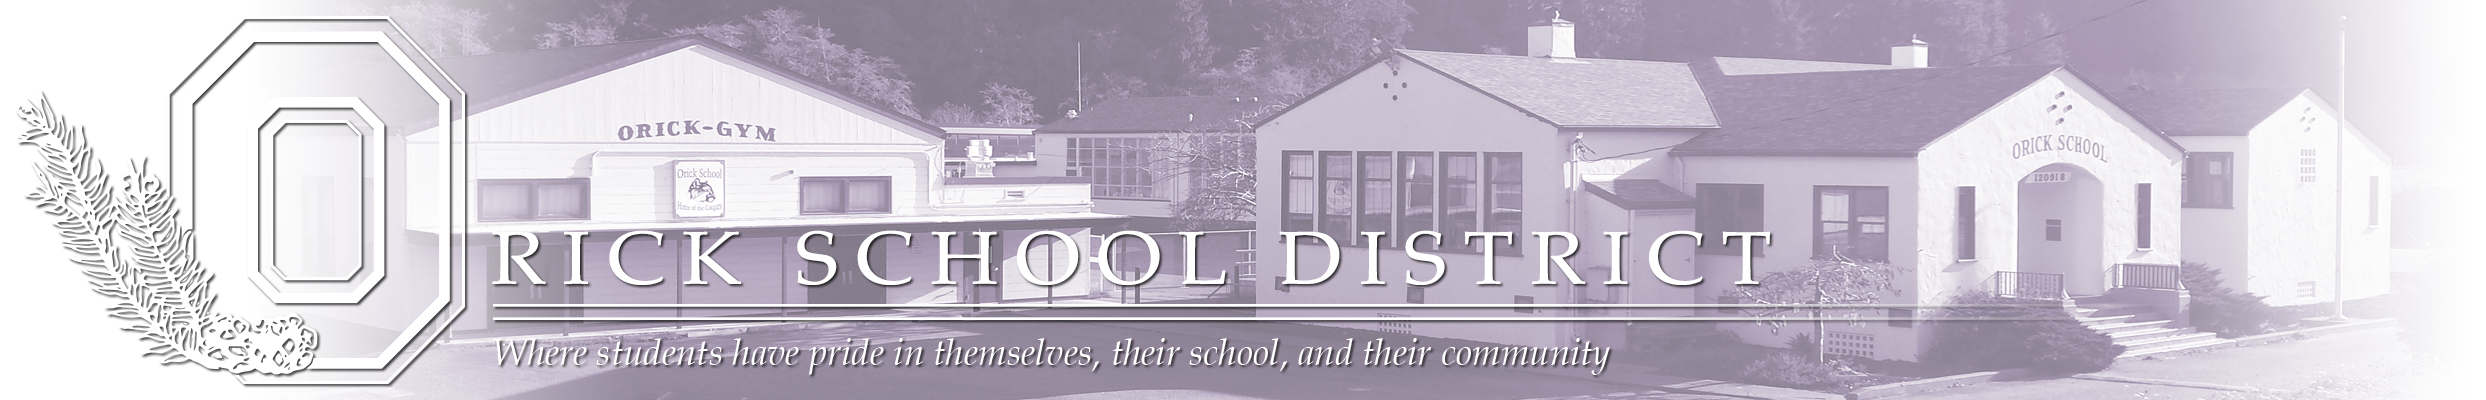 Orick School District Logo